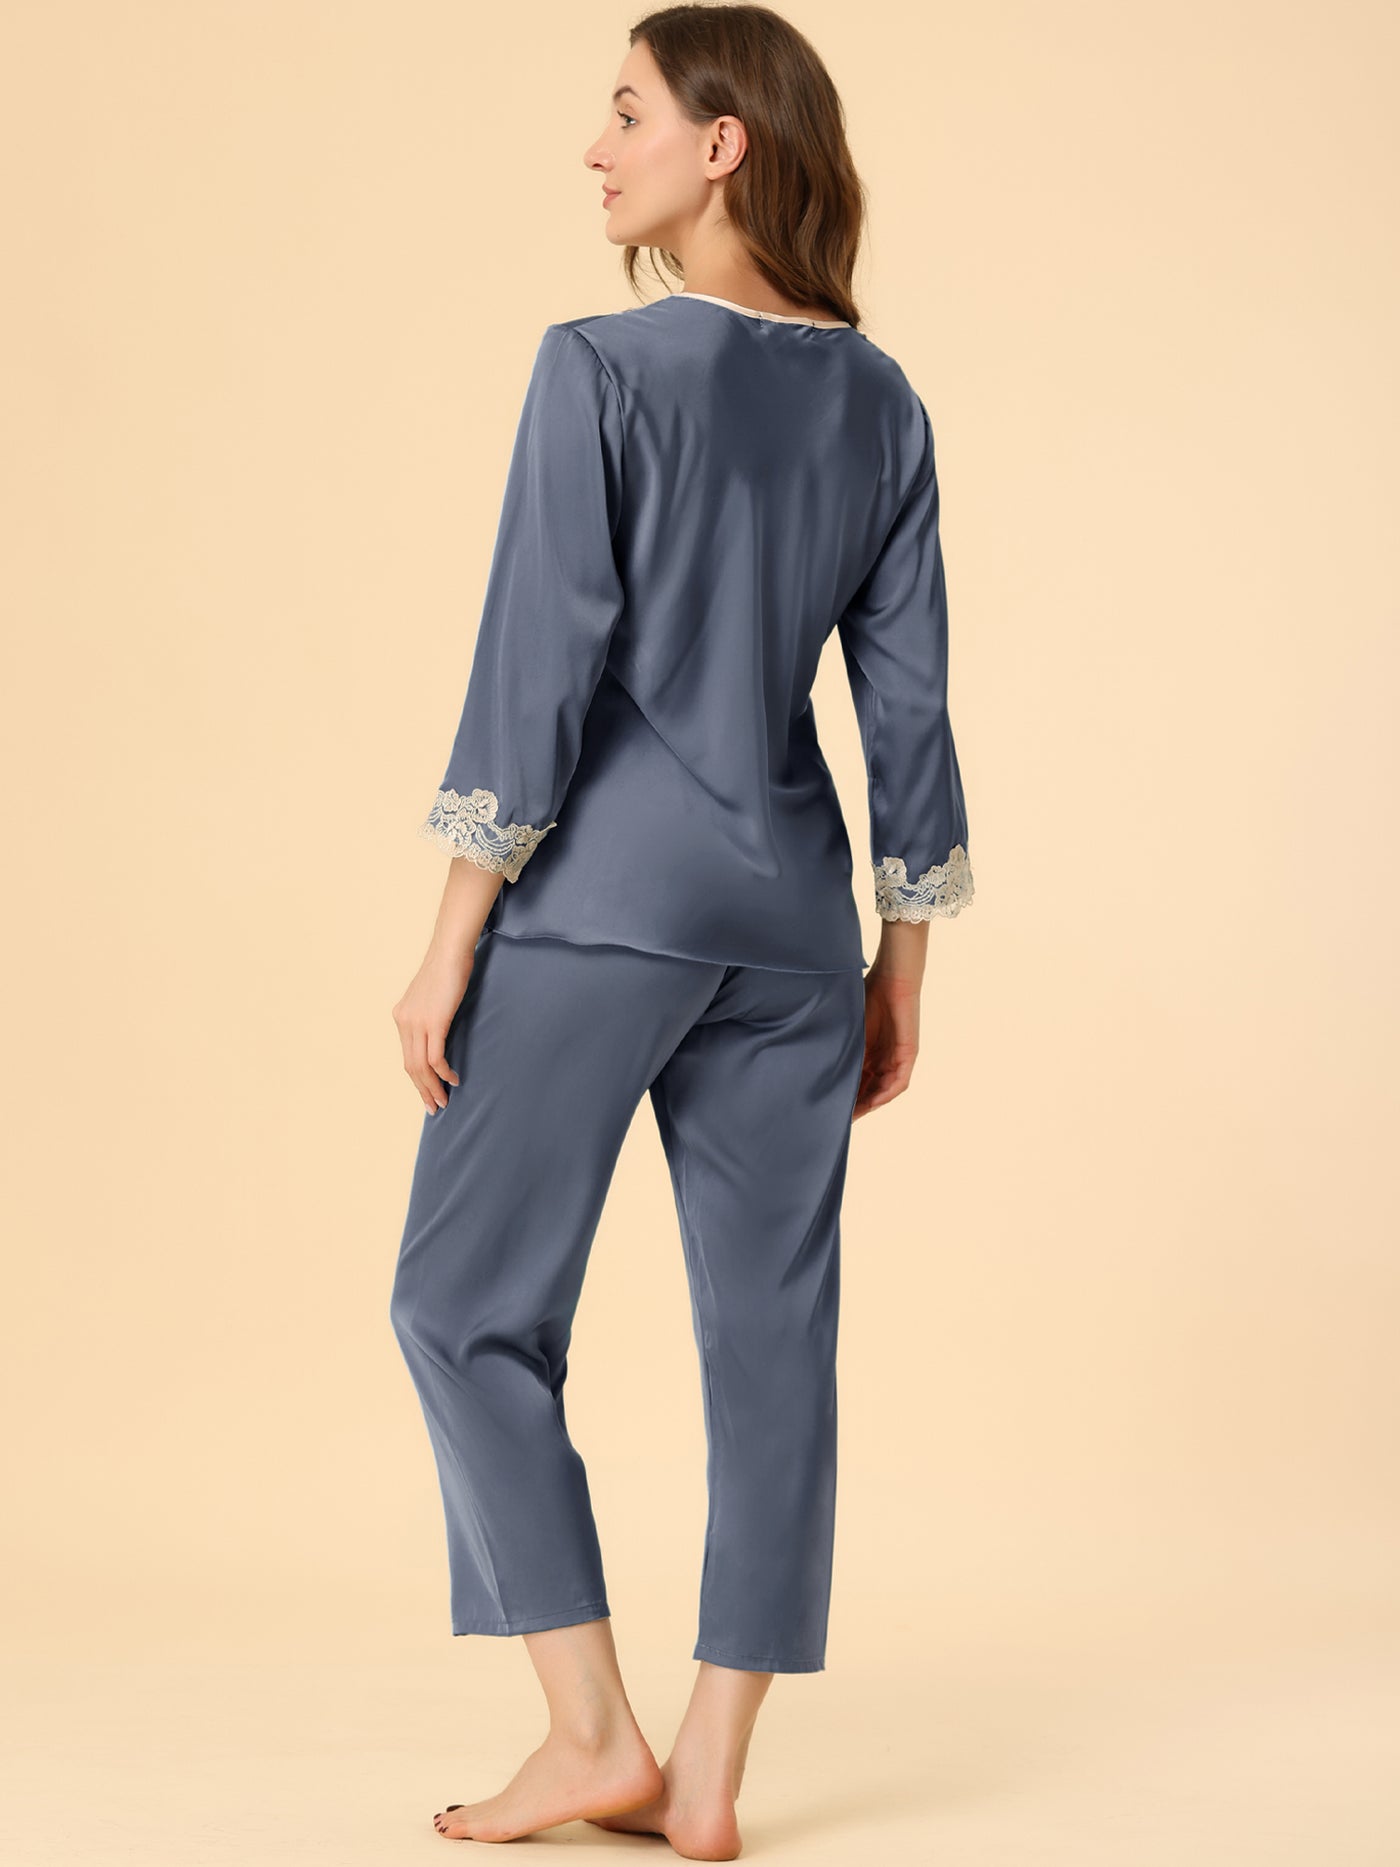 Allegra K Satin Sleepwear Night Suit V Neck Lace Nightwear Lounge Pajama Set